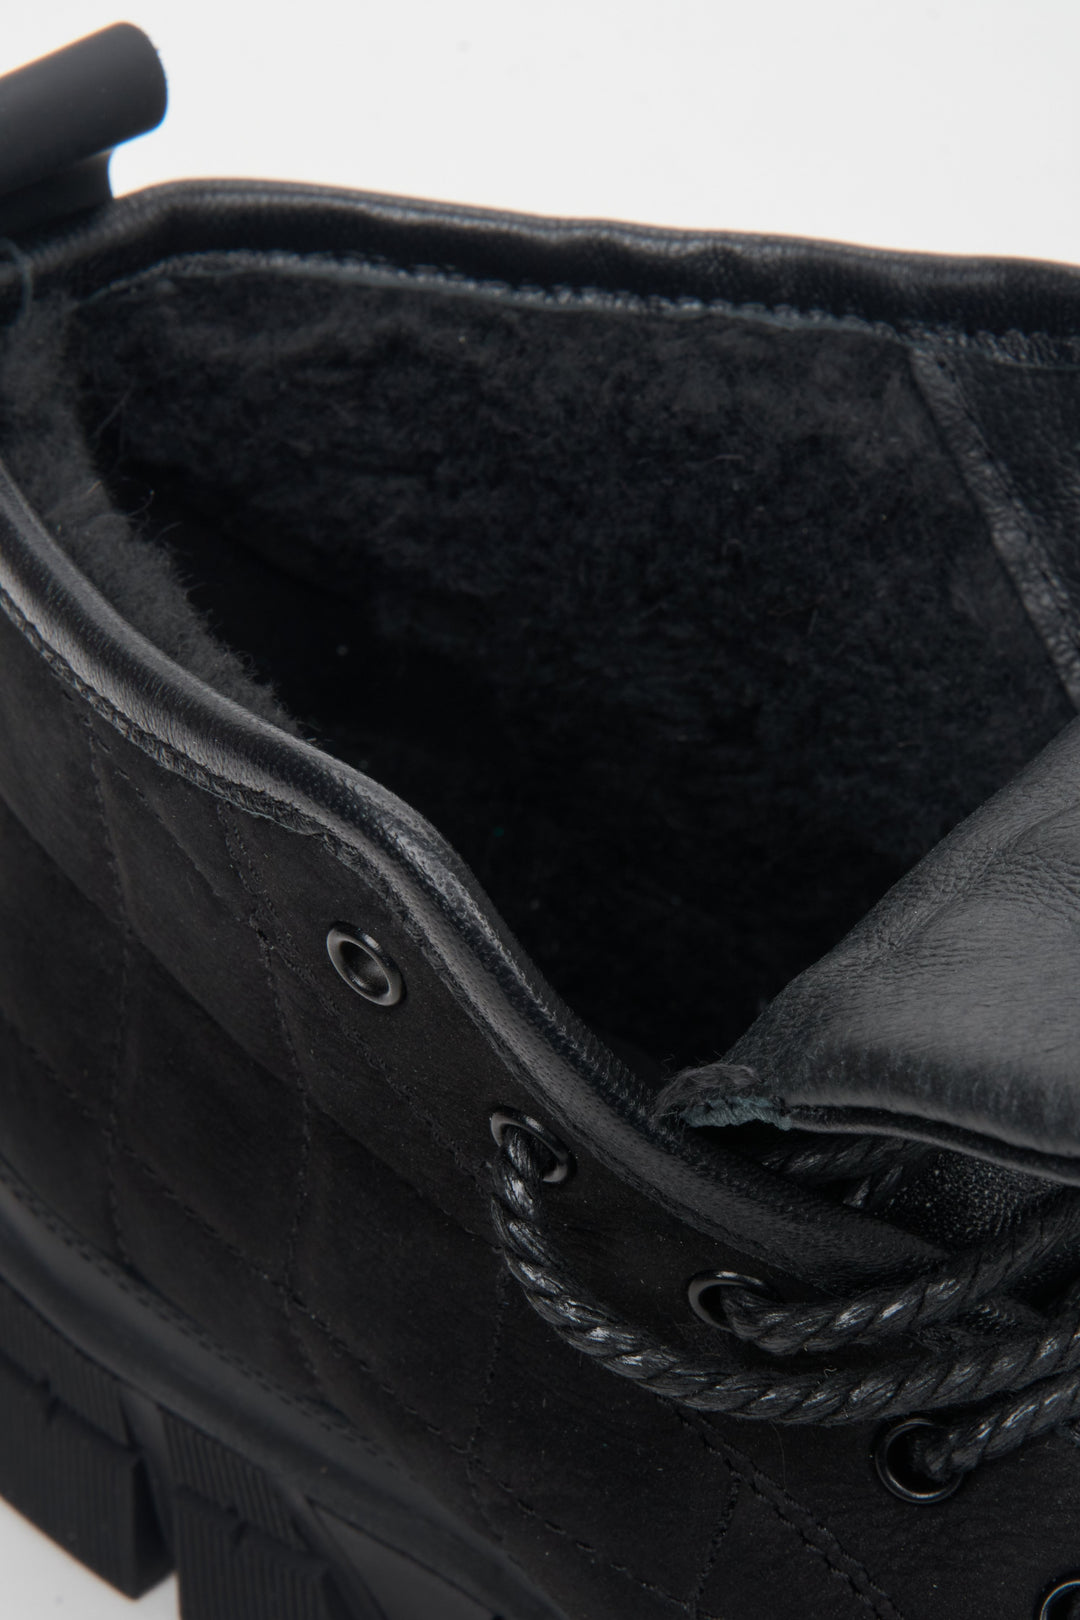 Men's black Estro winter boots - close-up of the boot's insulation.